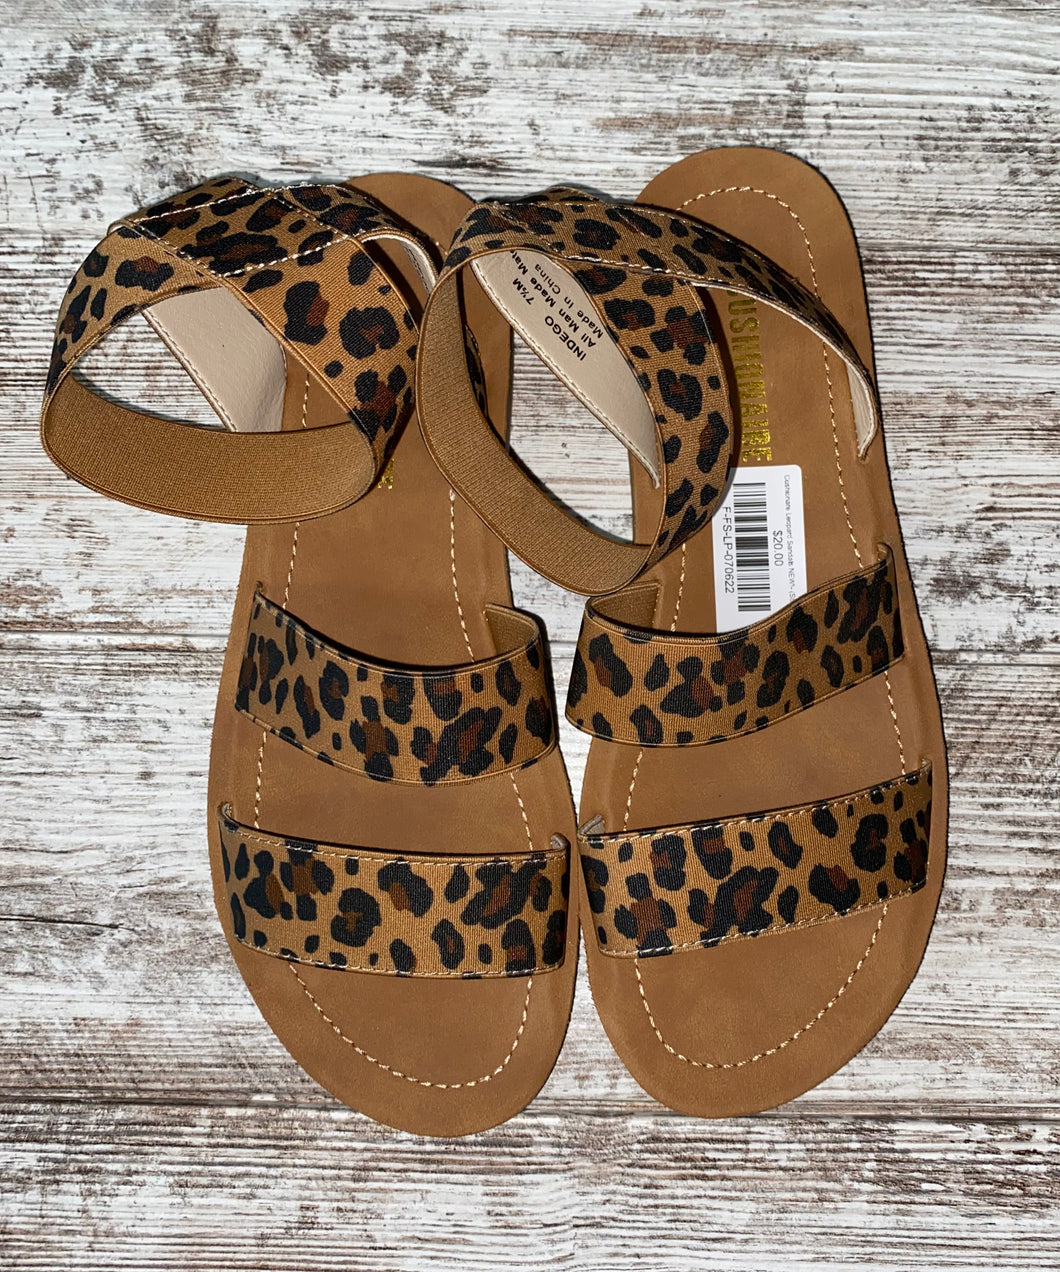 Cushionare Leopard Sandals NEW!- (Size 7.5)